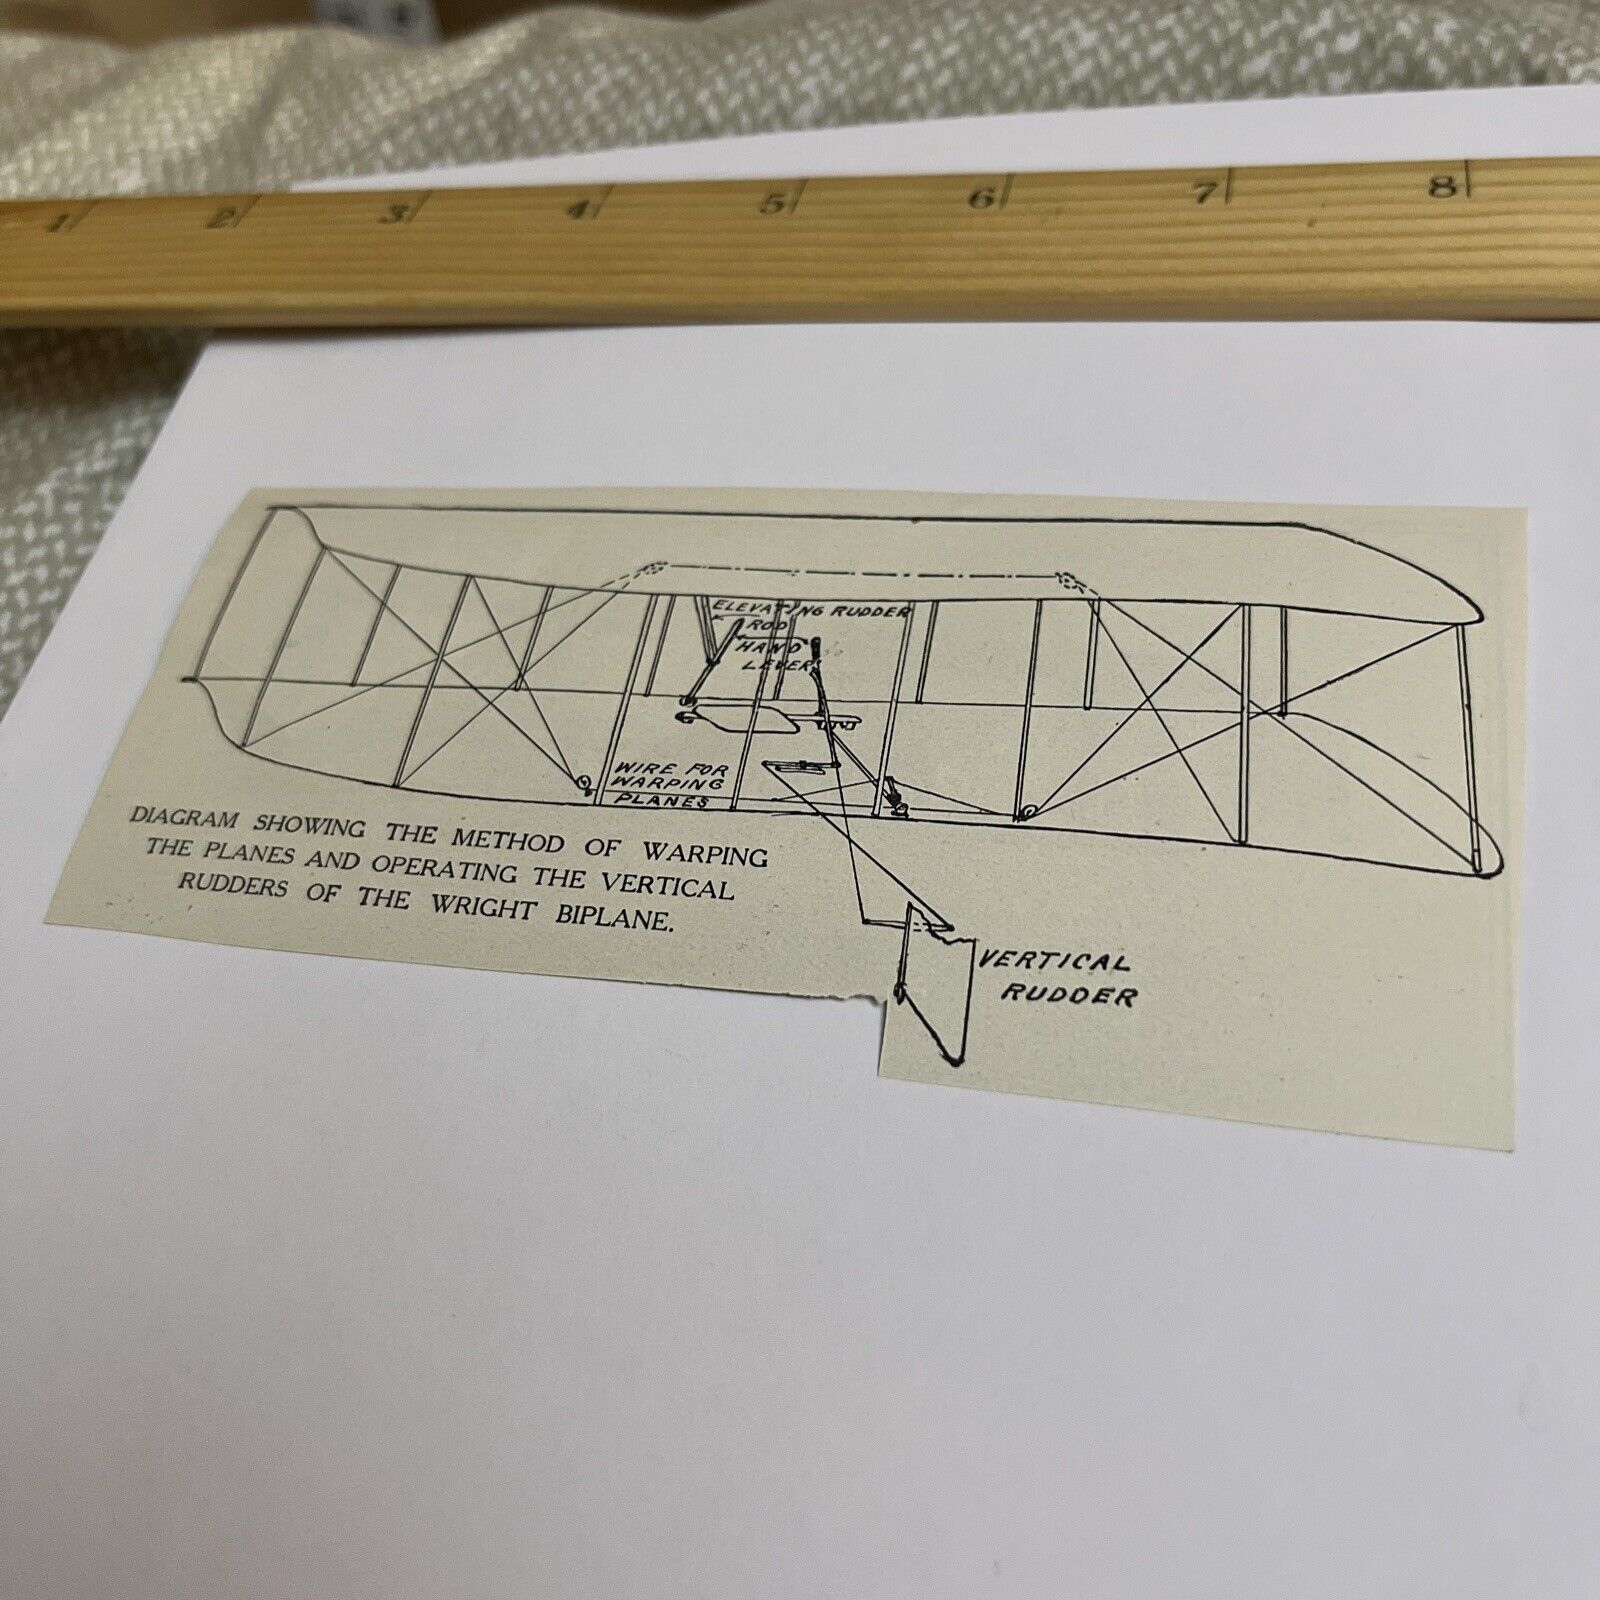 Antique 1909 Image: Diagram, Warping Planes, Operating Rudders of Wright Biplane